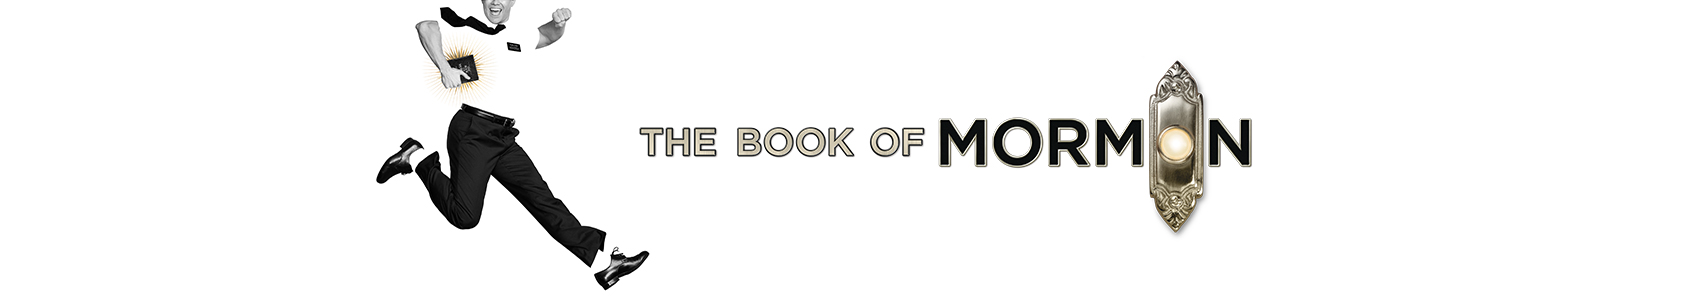 Update on The Book of Mormon season